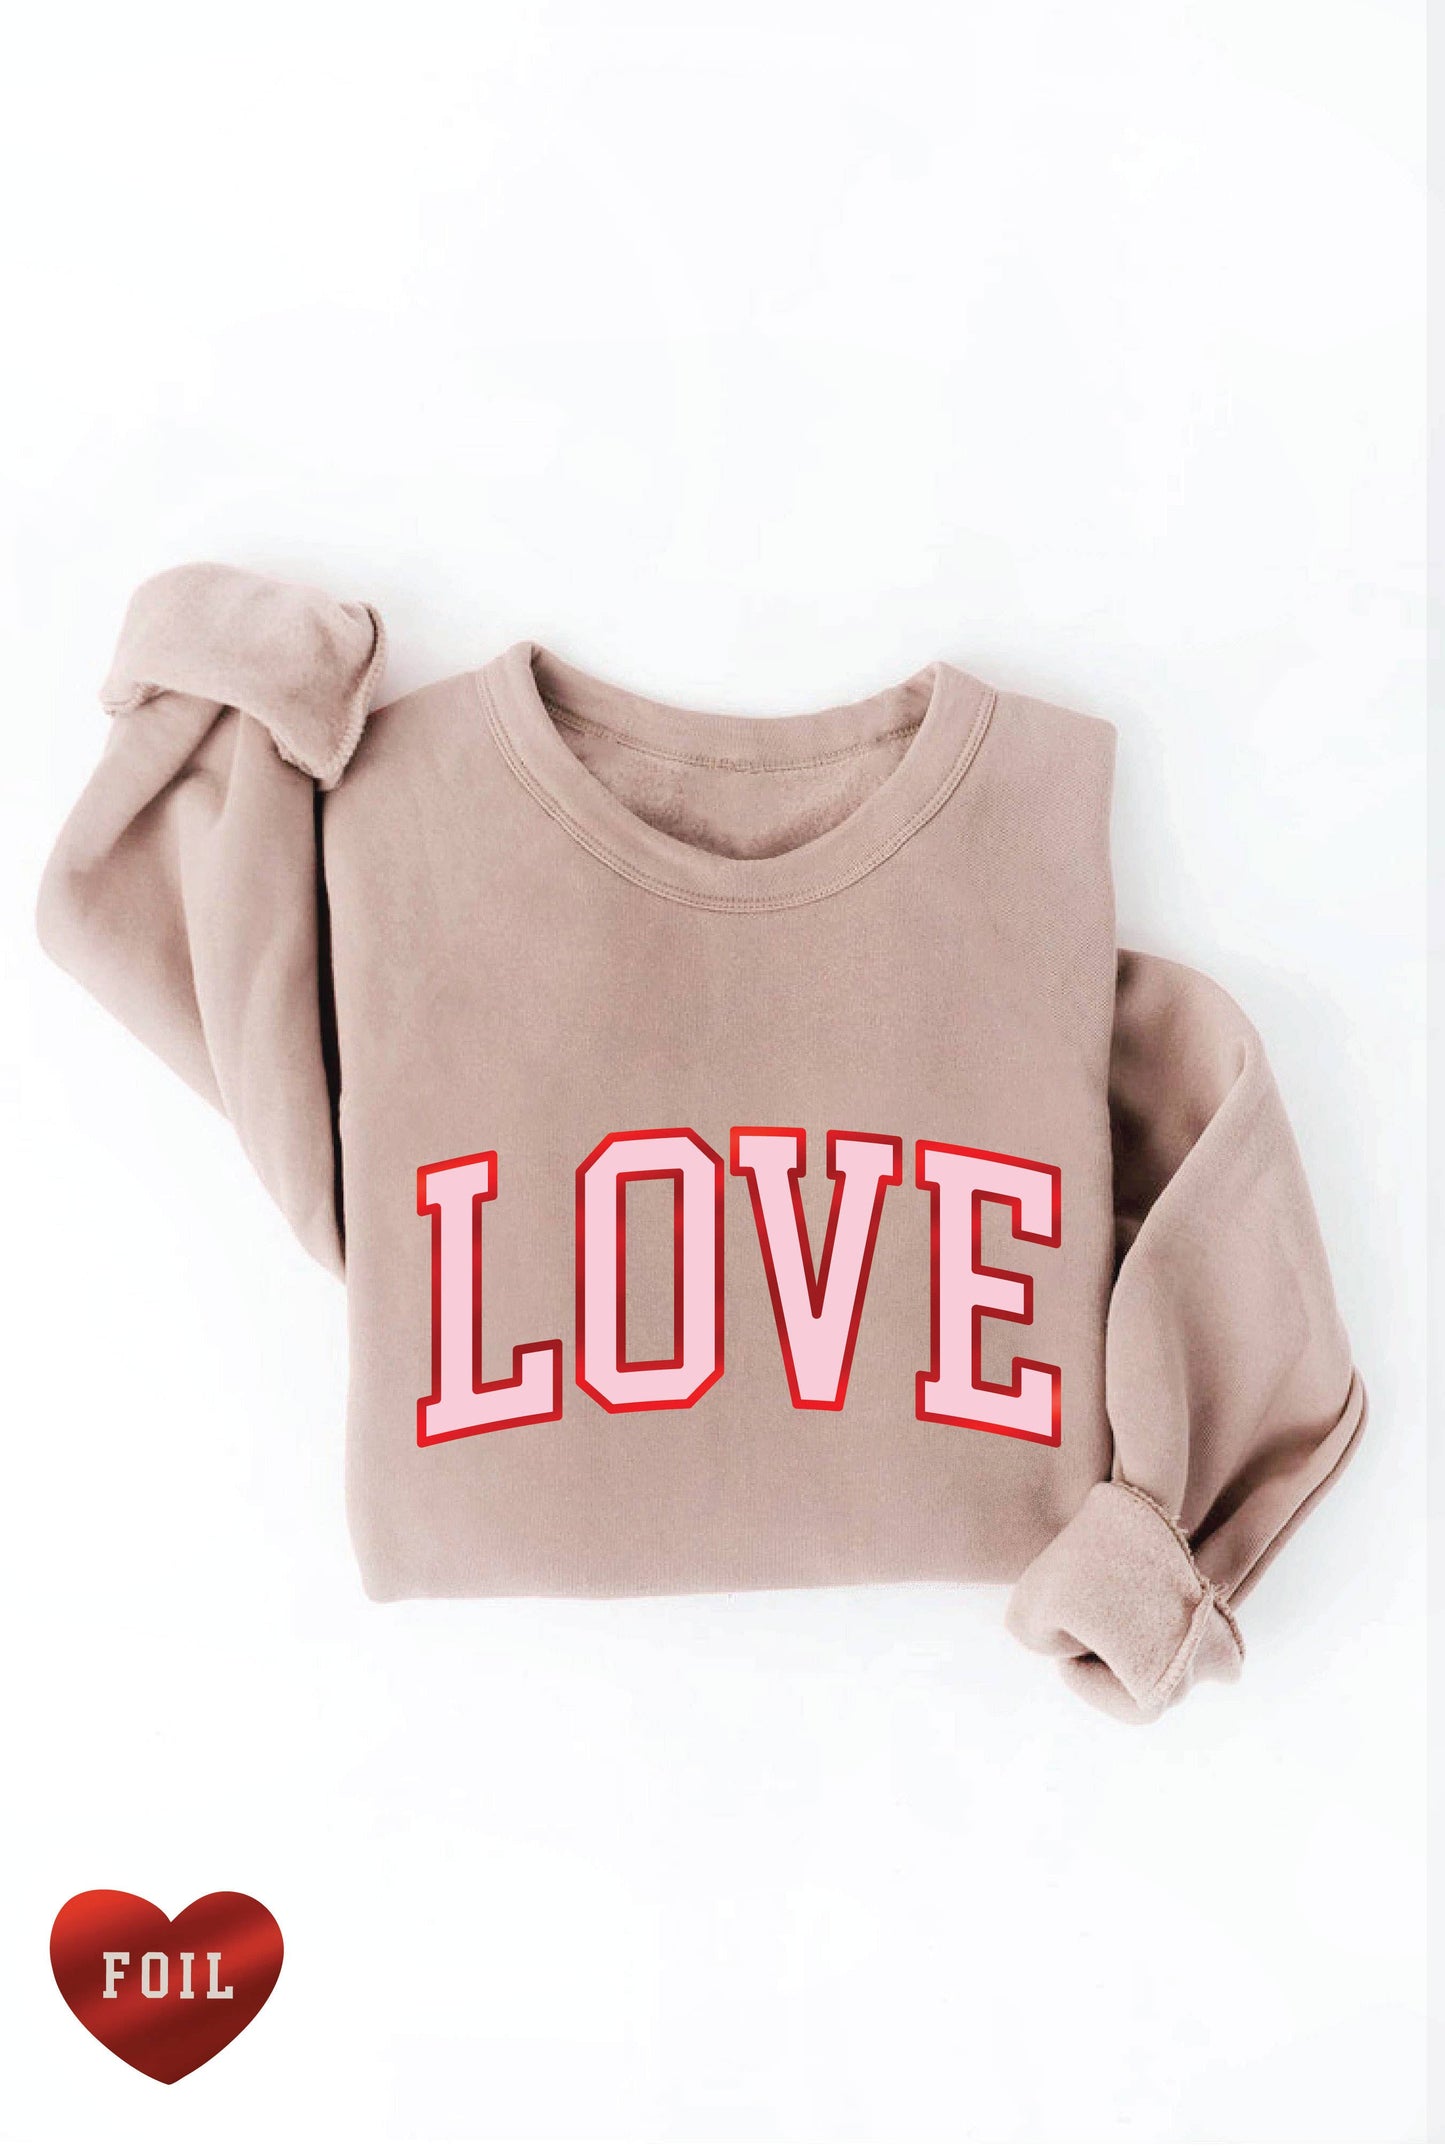 LOVE FOIL Graphic Sweatshirt: M / ROSE